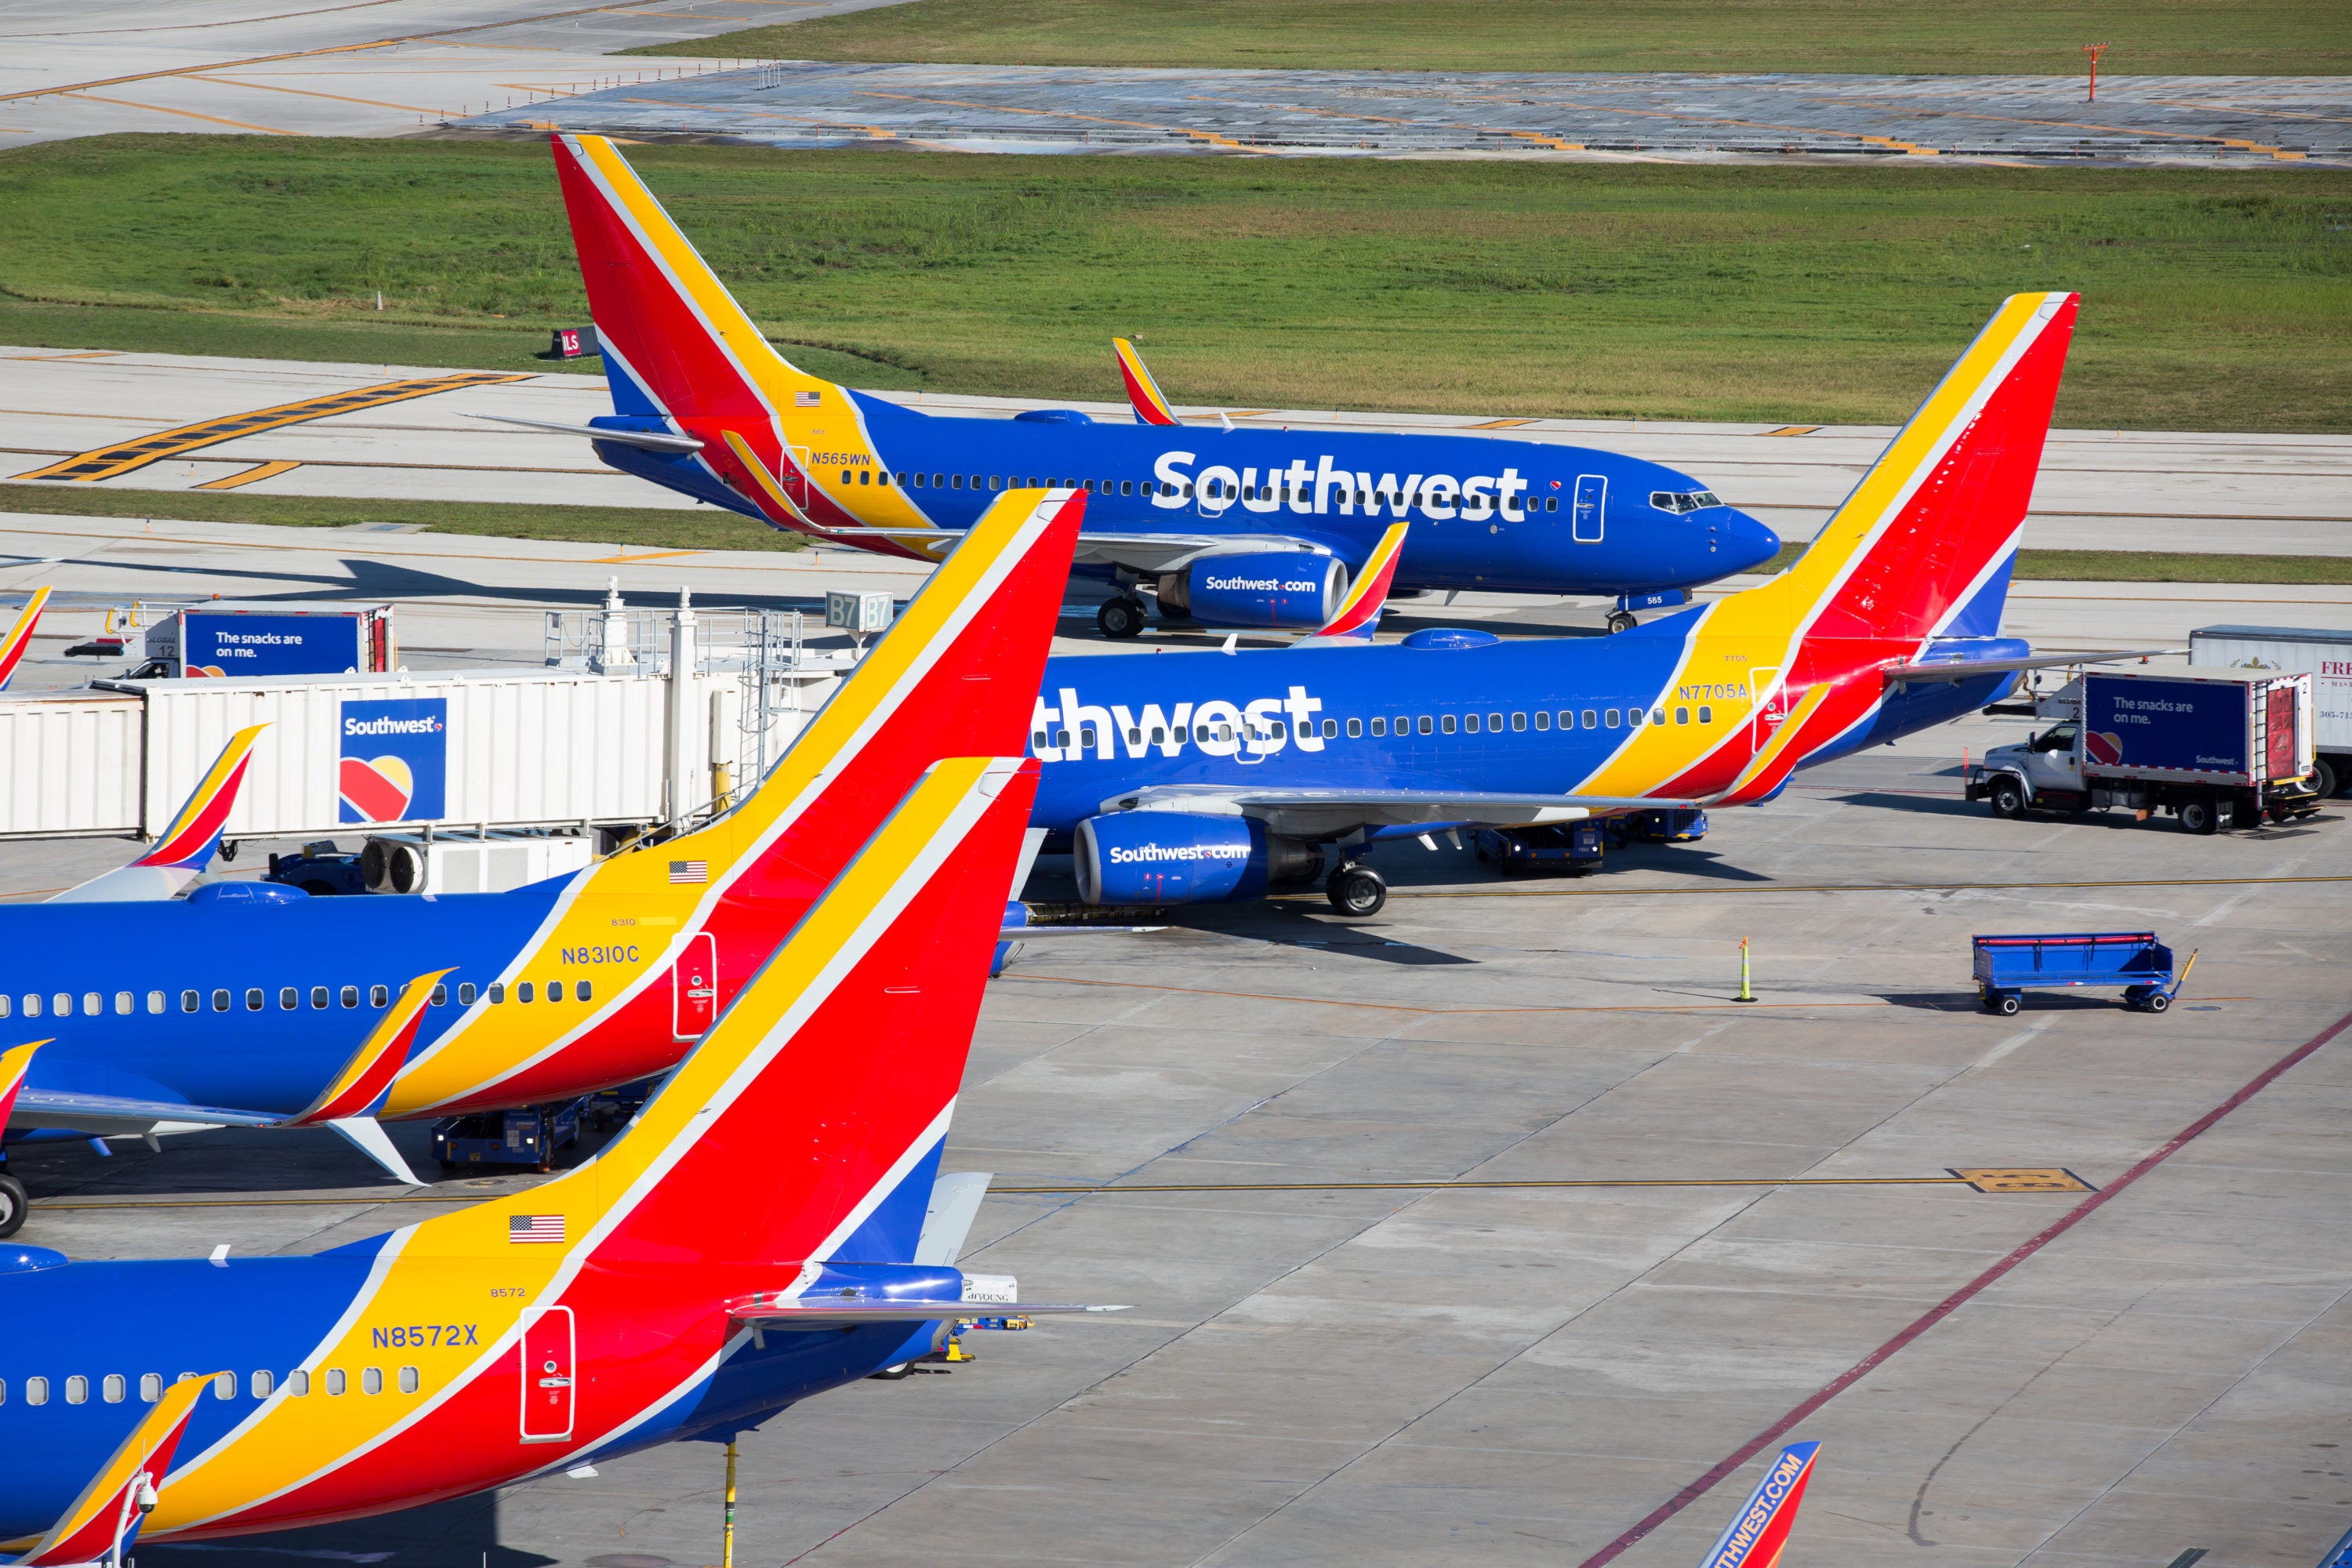 Southwest planes at gate